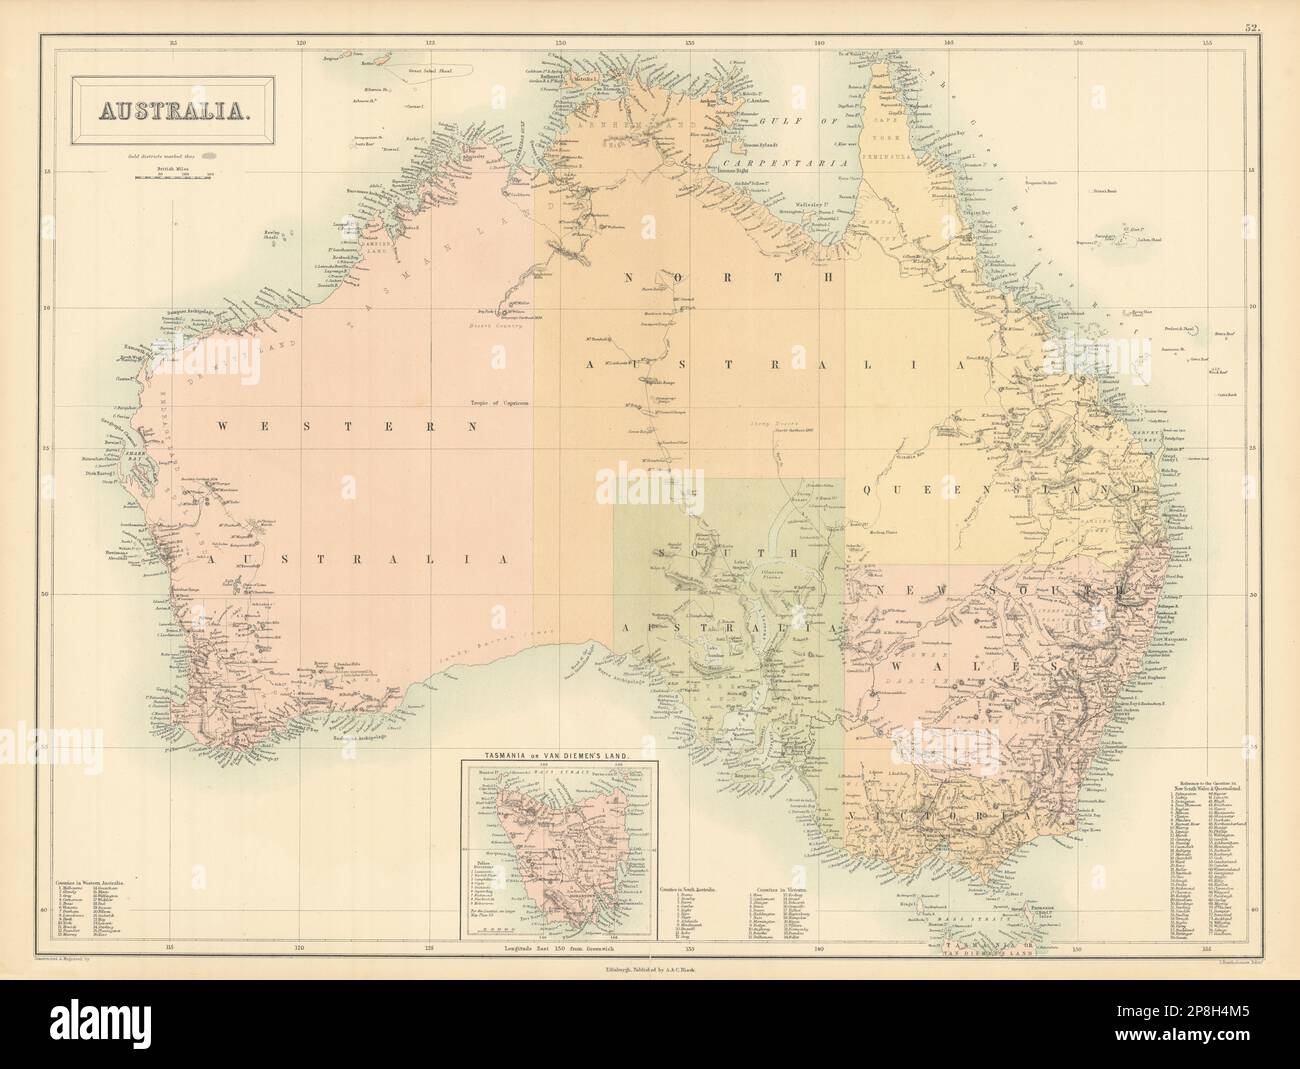 Australien. Sturt Stuart, Austin Gregory, die Routen der Entdecker. BARTHOLOMEW 1862 Karte Stockfoto